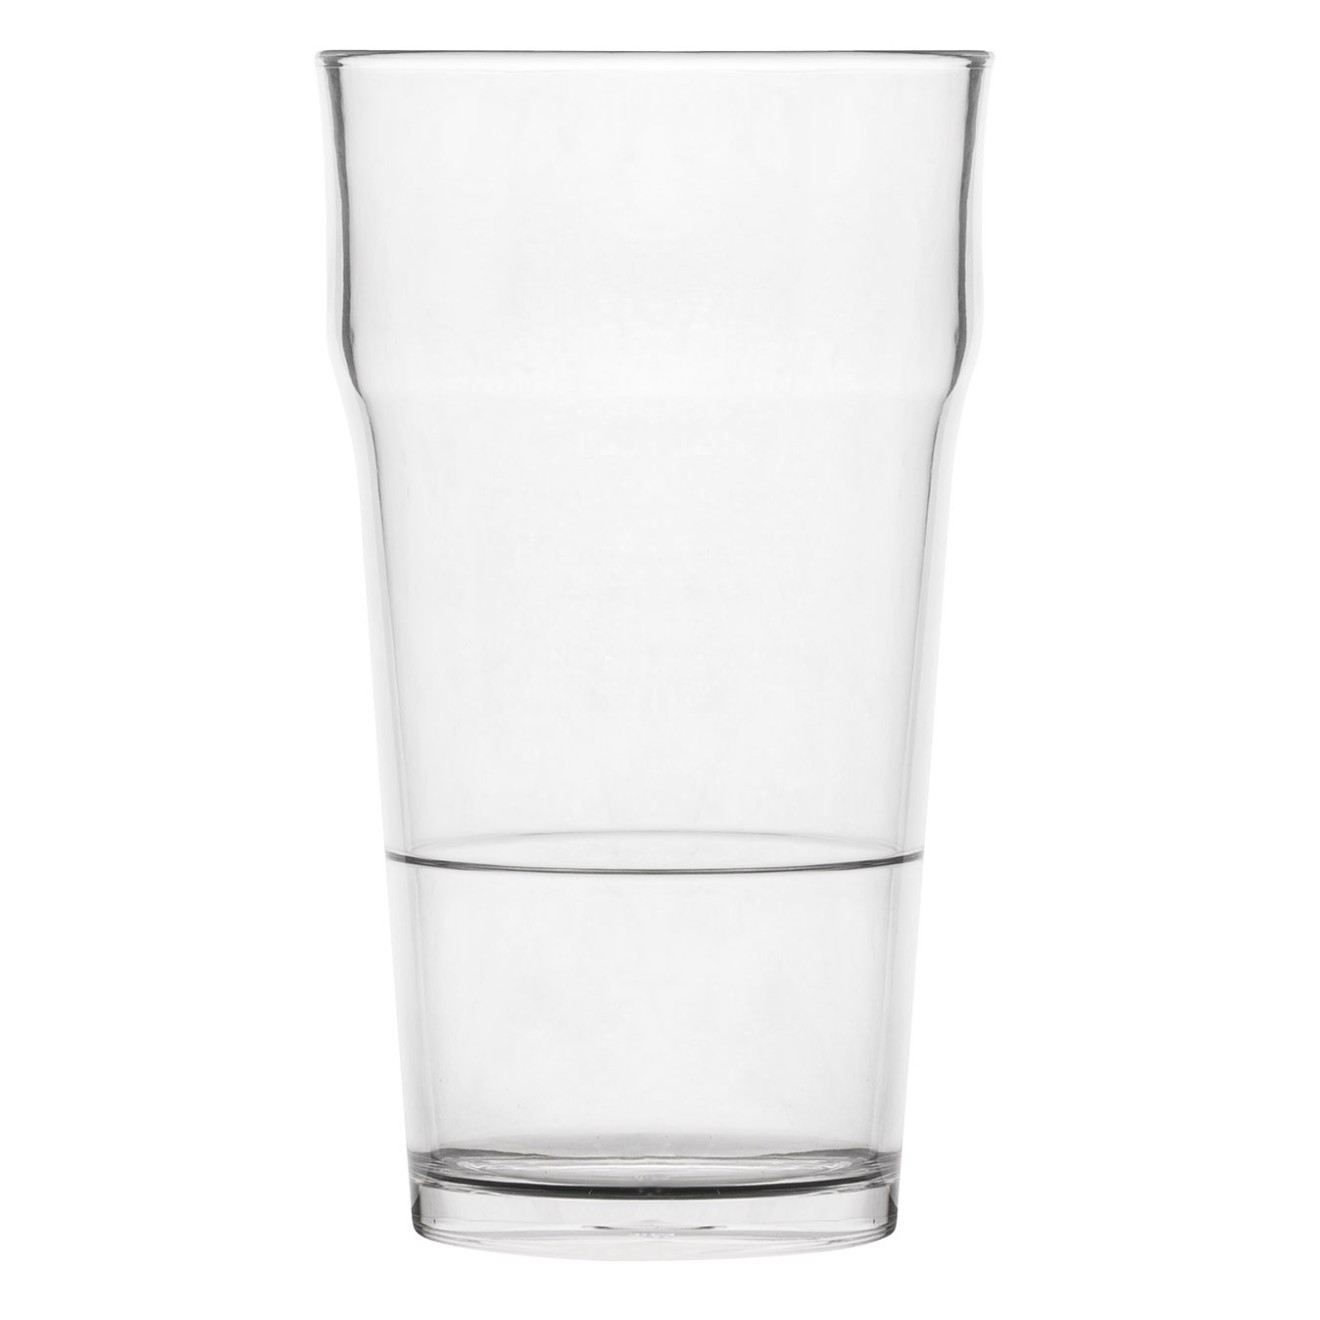 Pint: Stapelbares Mehrweg-Pint-Glas aus Kunststoff online kaufen